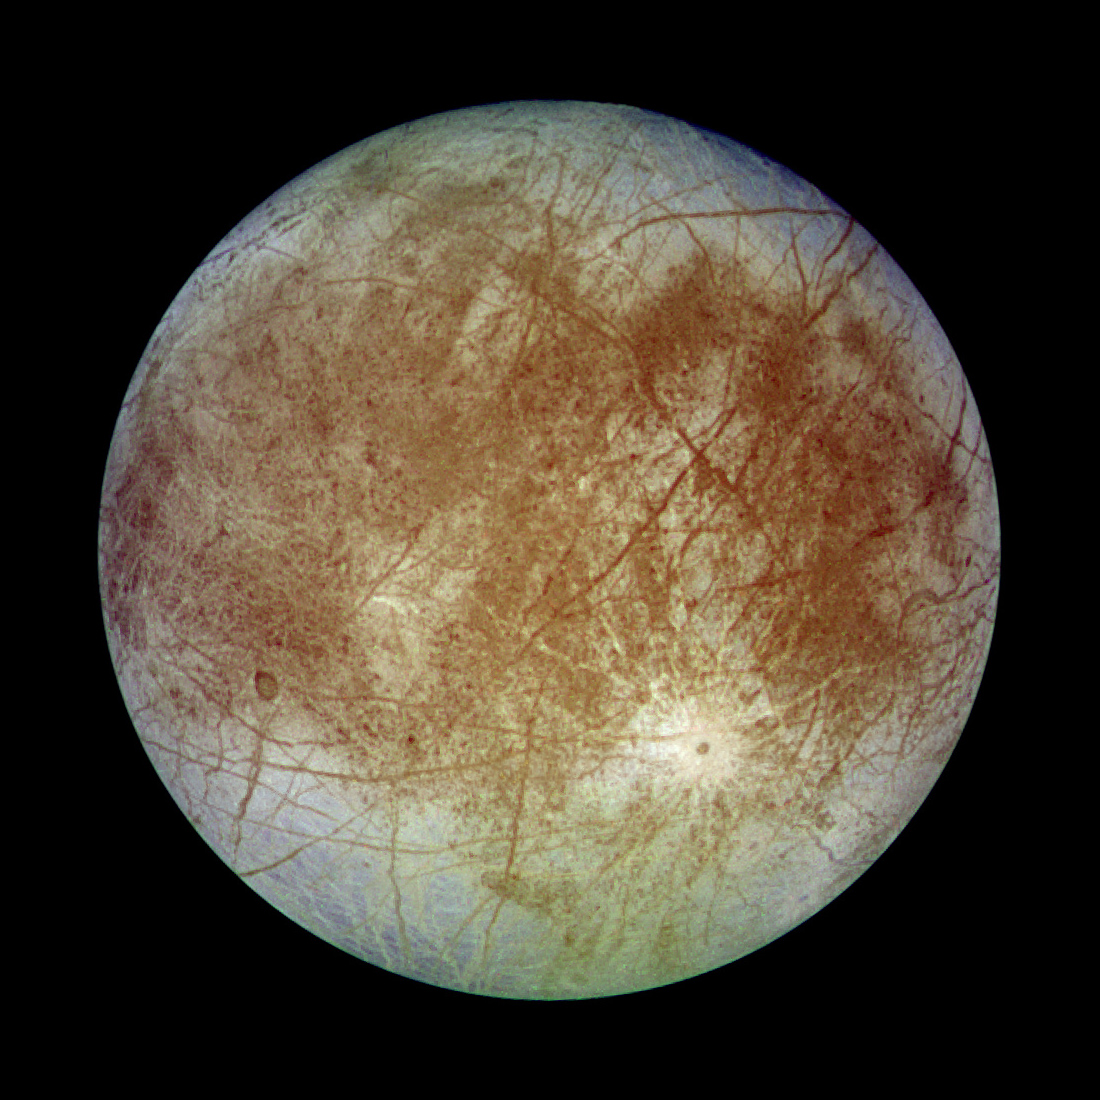 https://upload.wikimedia.org/wikipedia/commons/e/e4/Europa-moon-with-margins.jpg